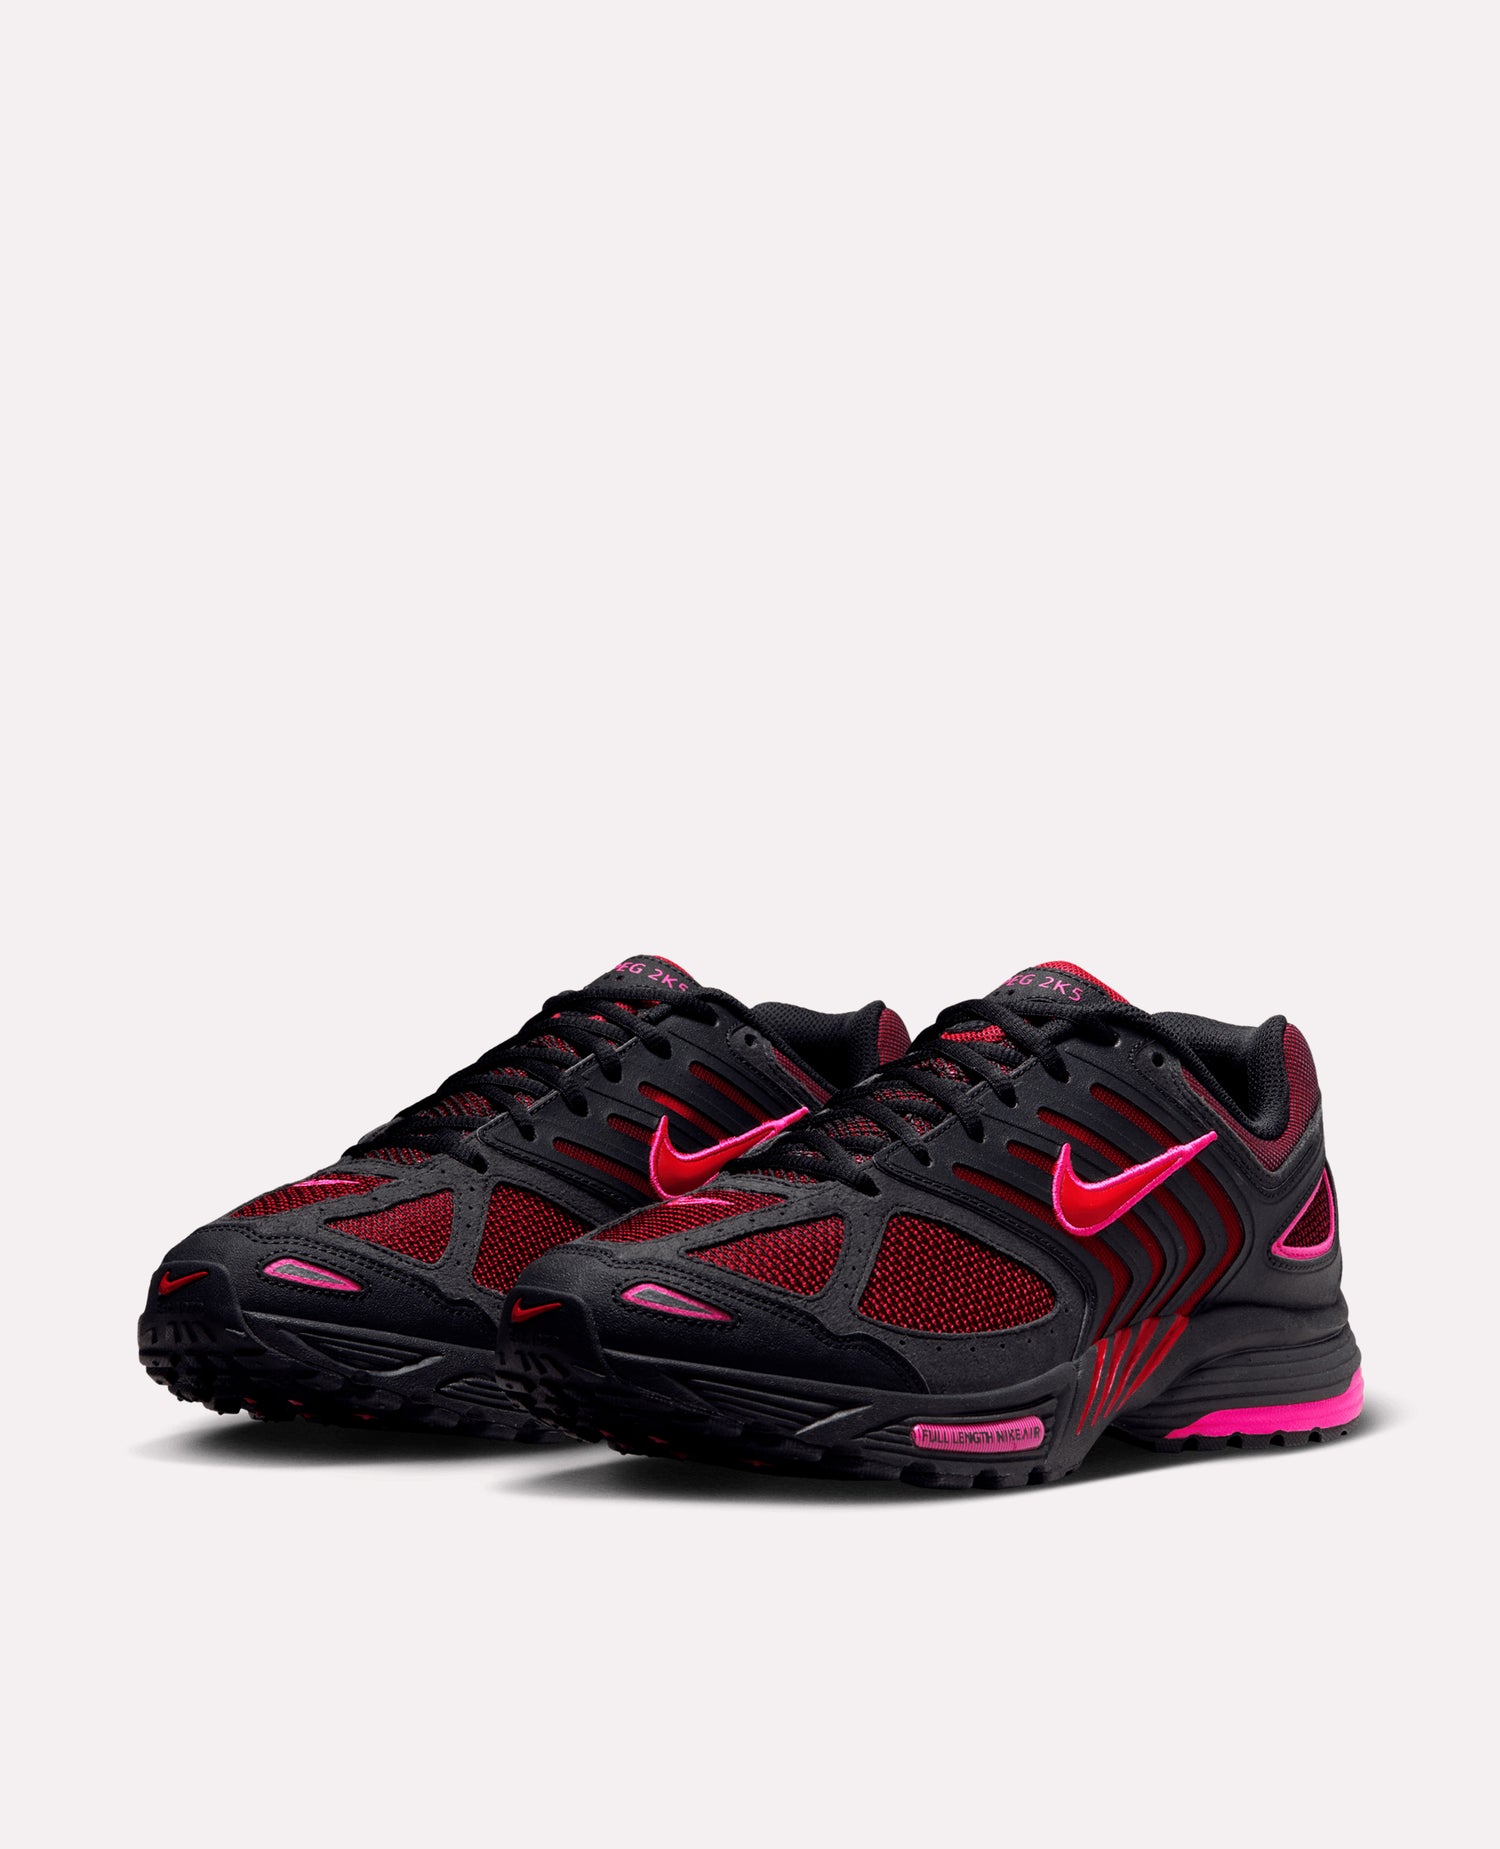 Nike Air Peg 2K5 (Black/Fire Red-Fierce Pink)